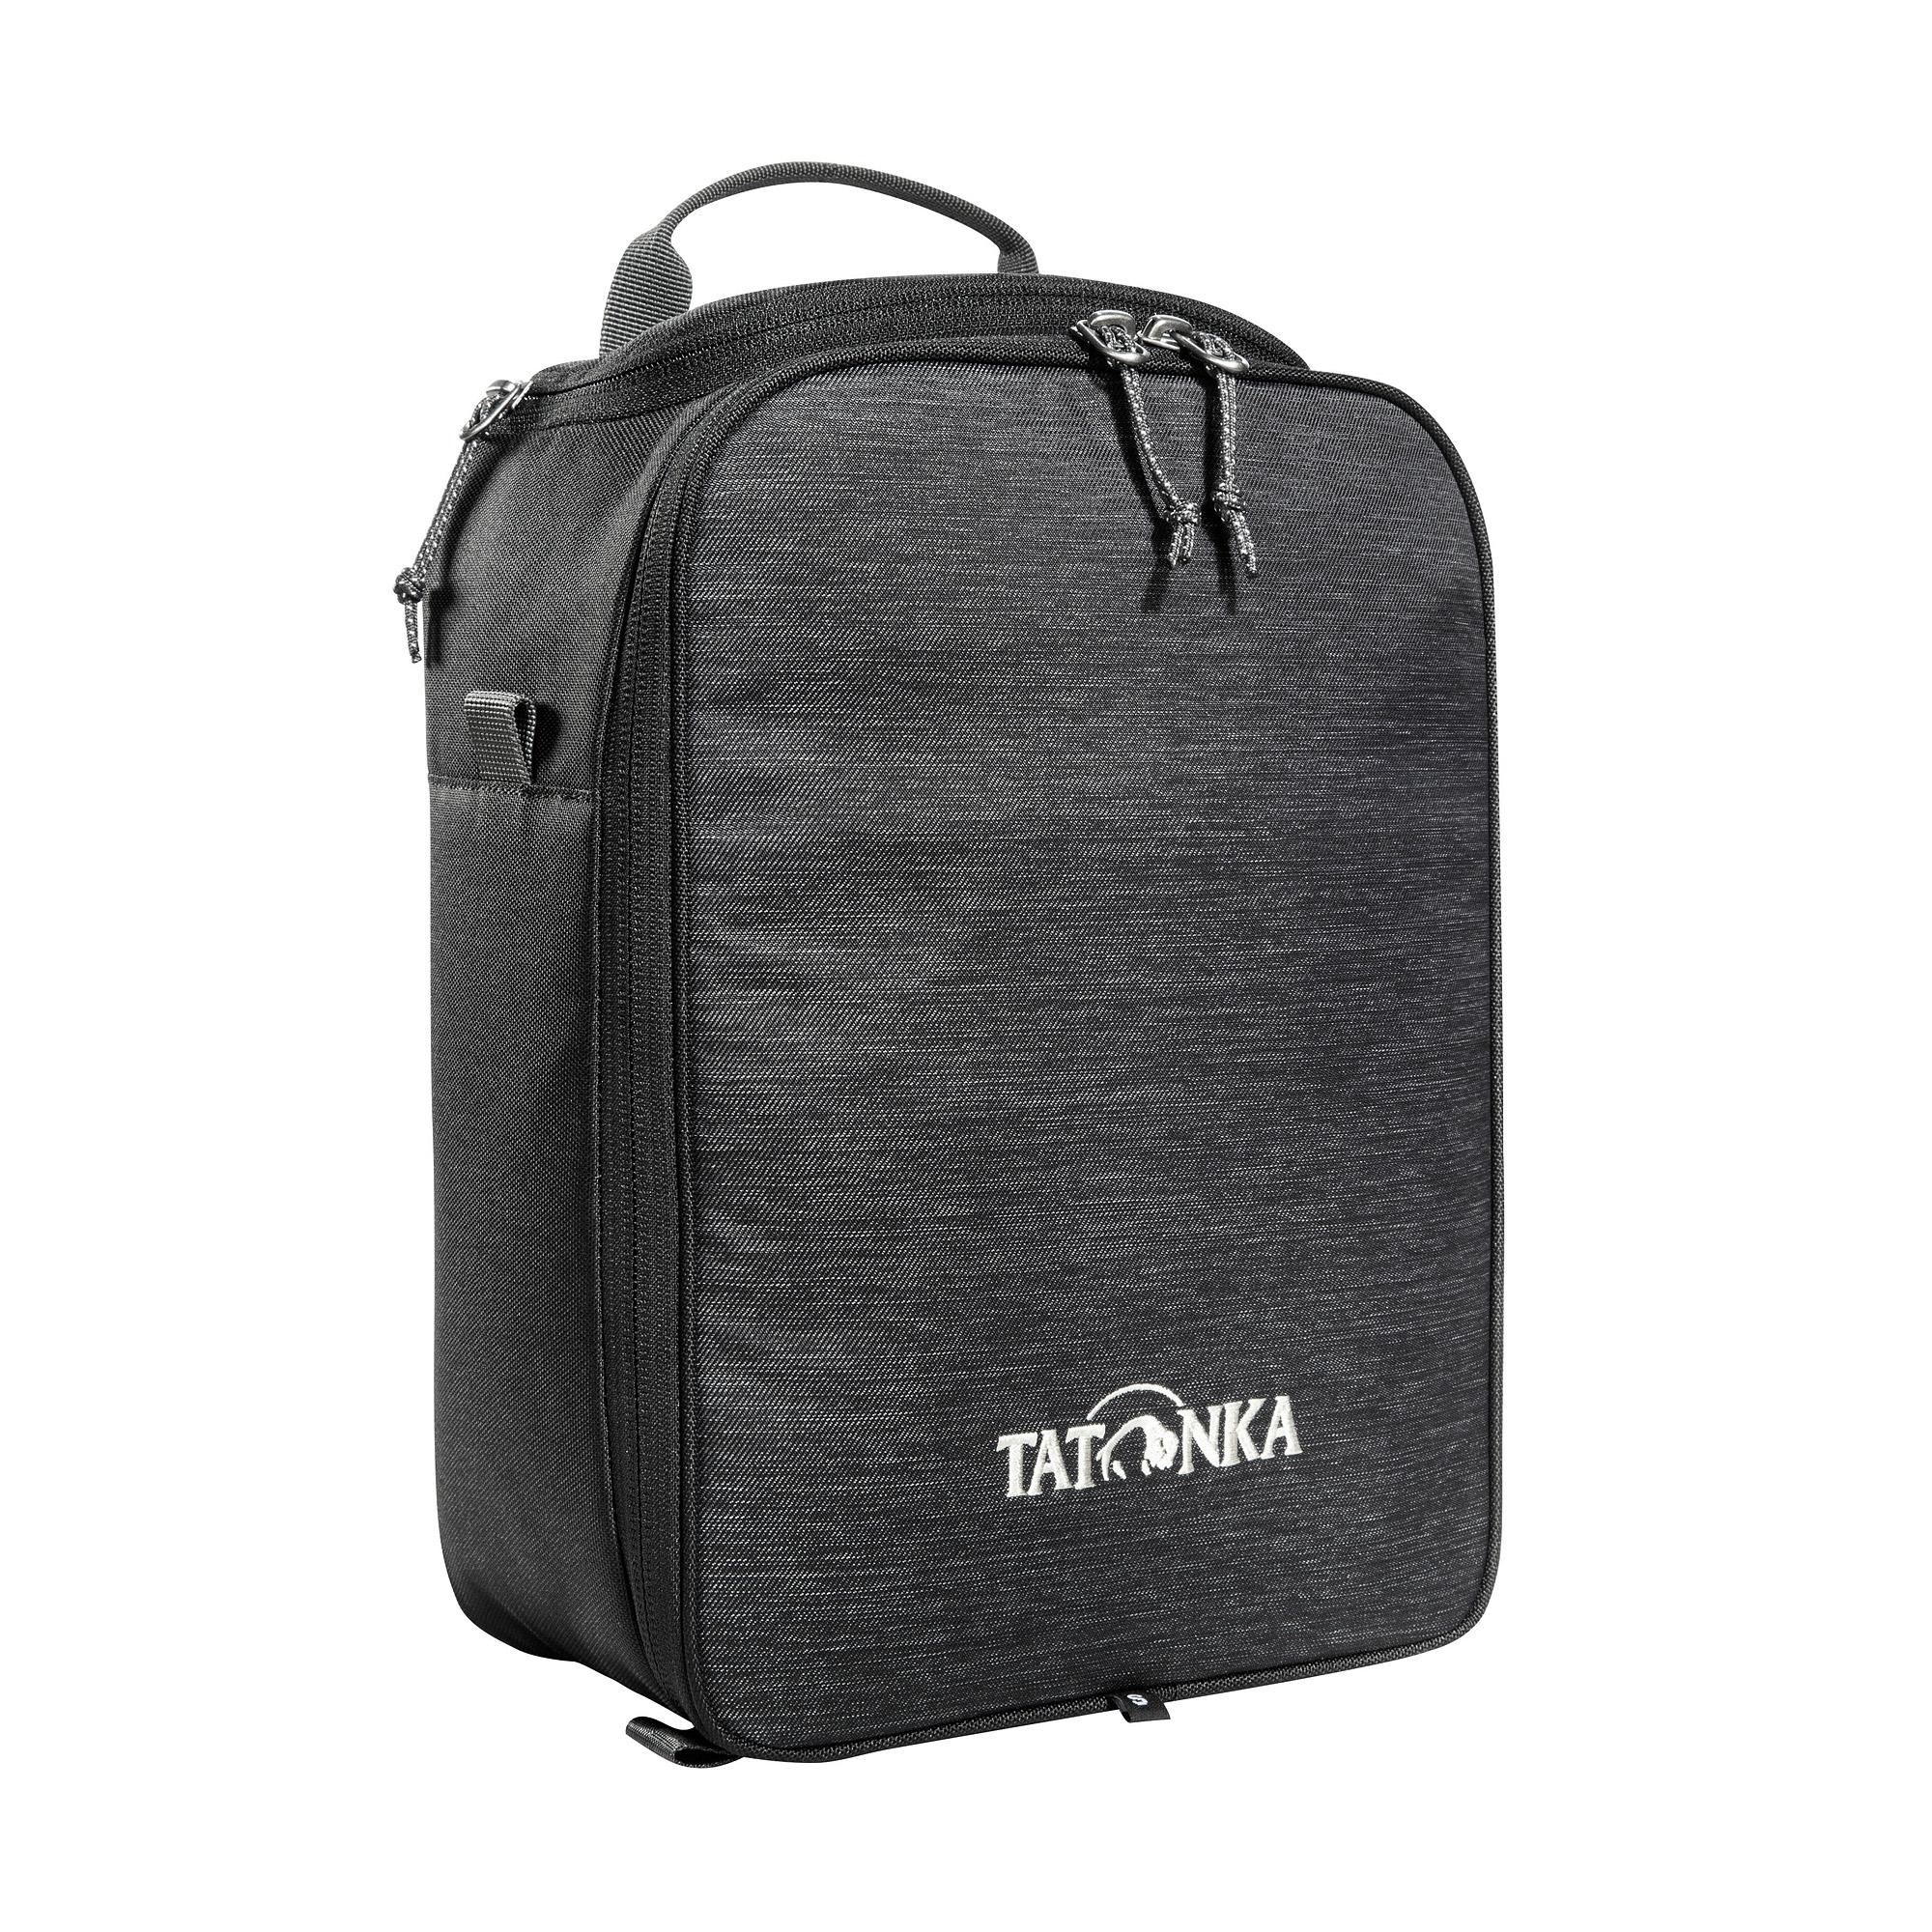 Tatonka Cooler Bag S off black schwarz Sonstige Taschen 4013236336313